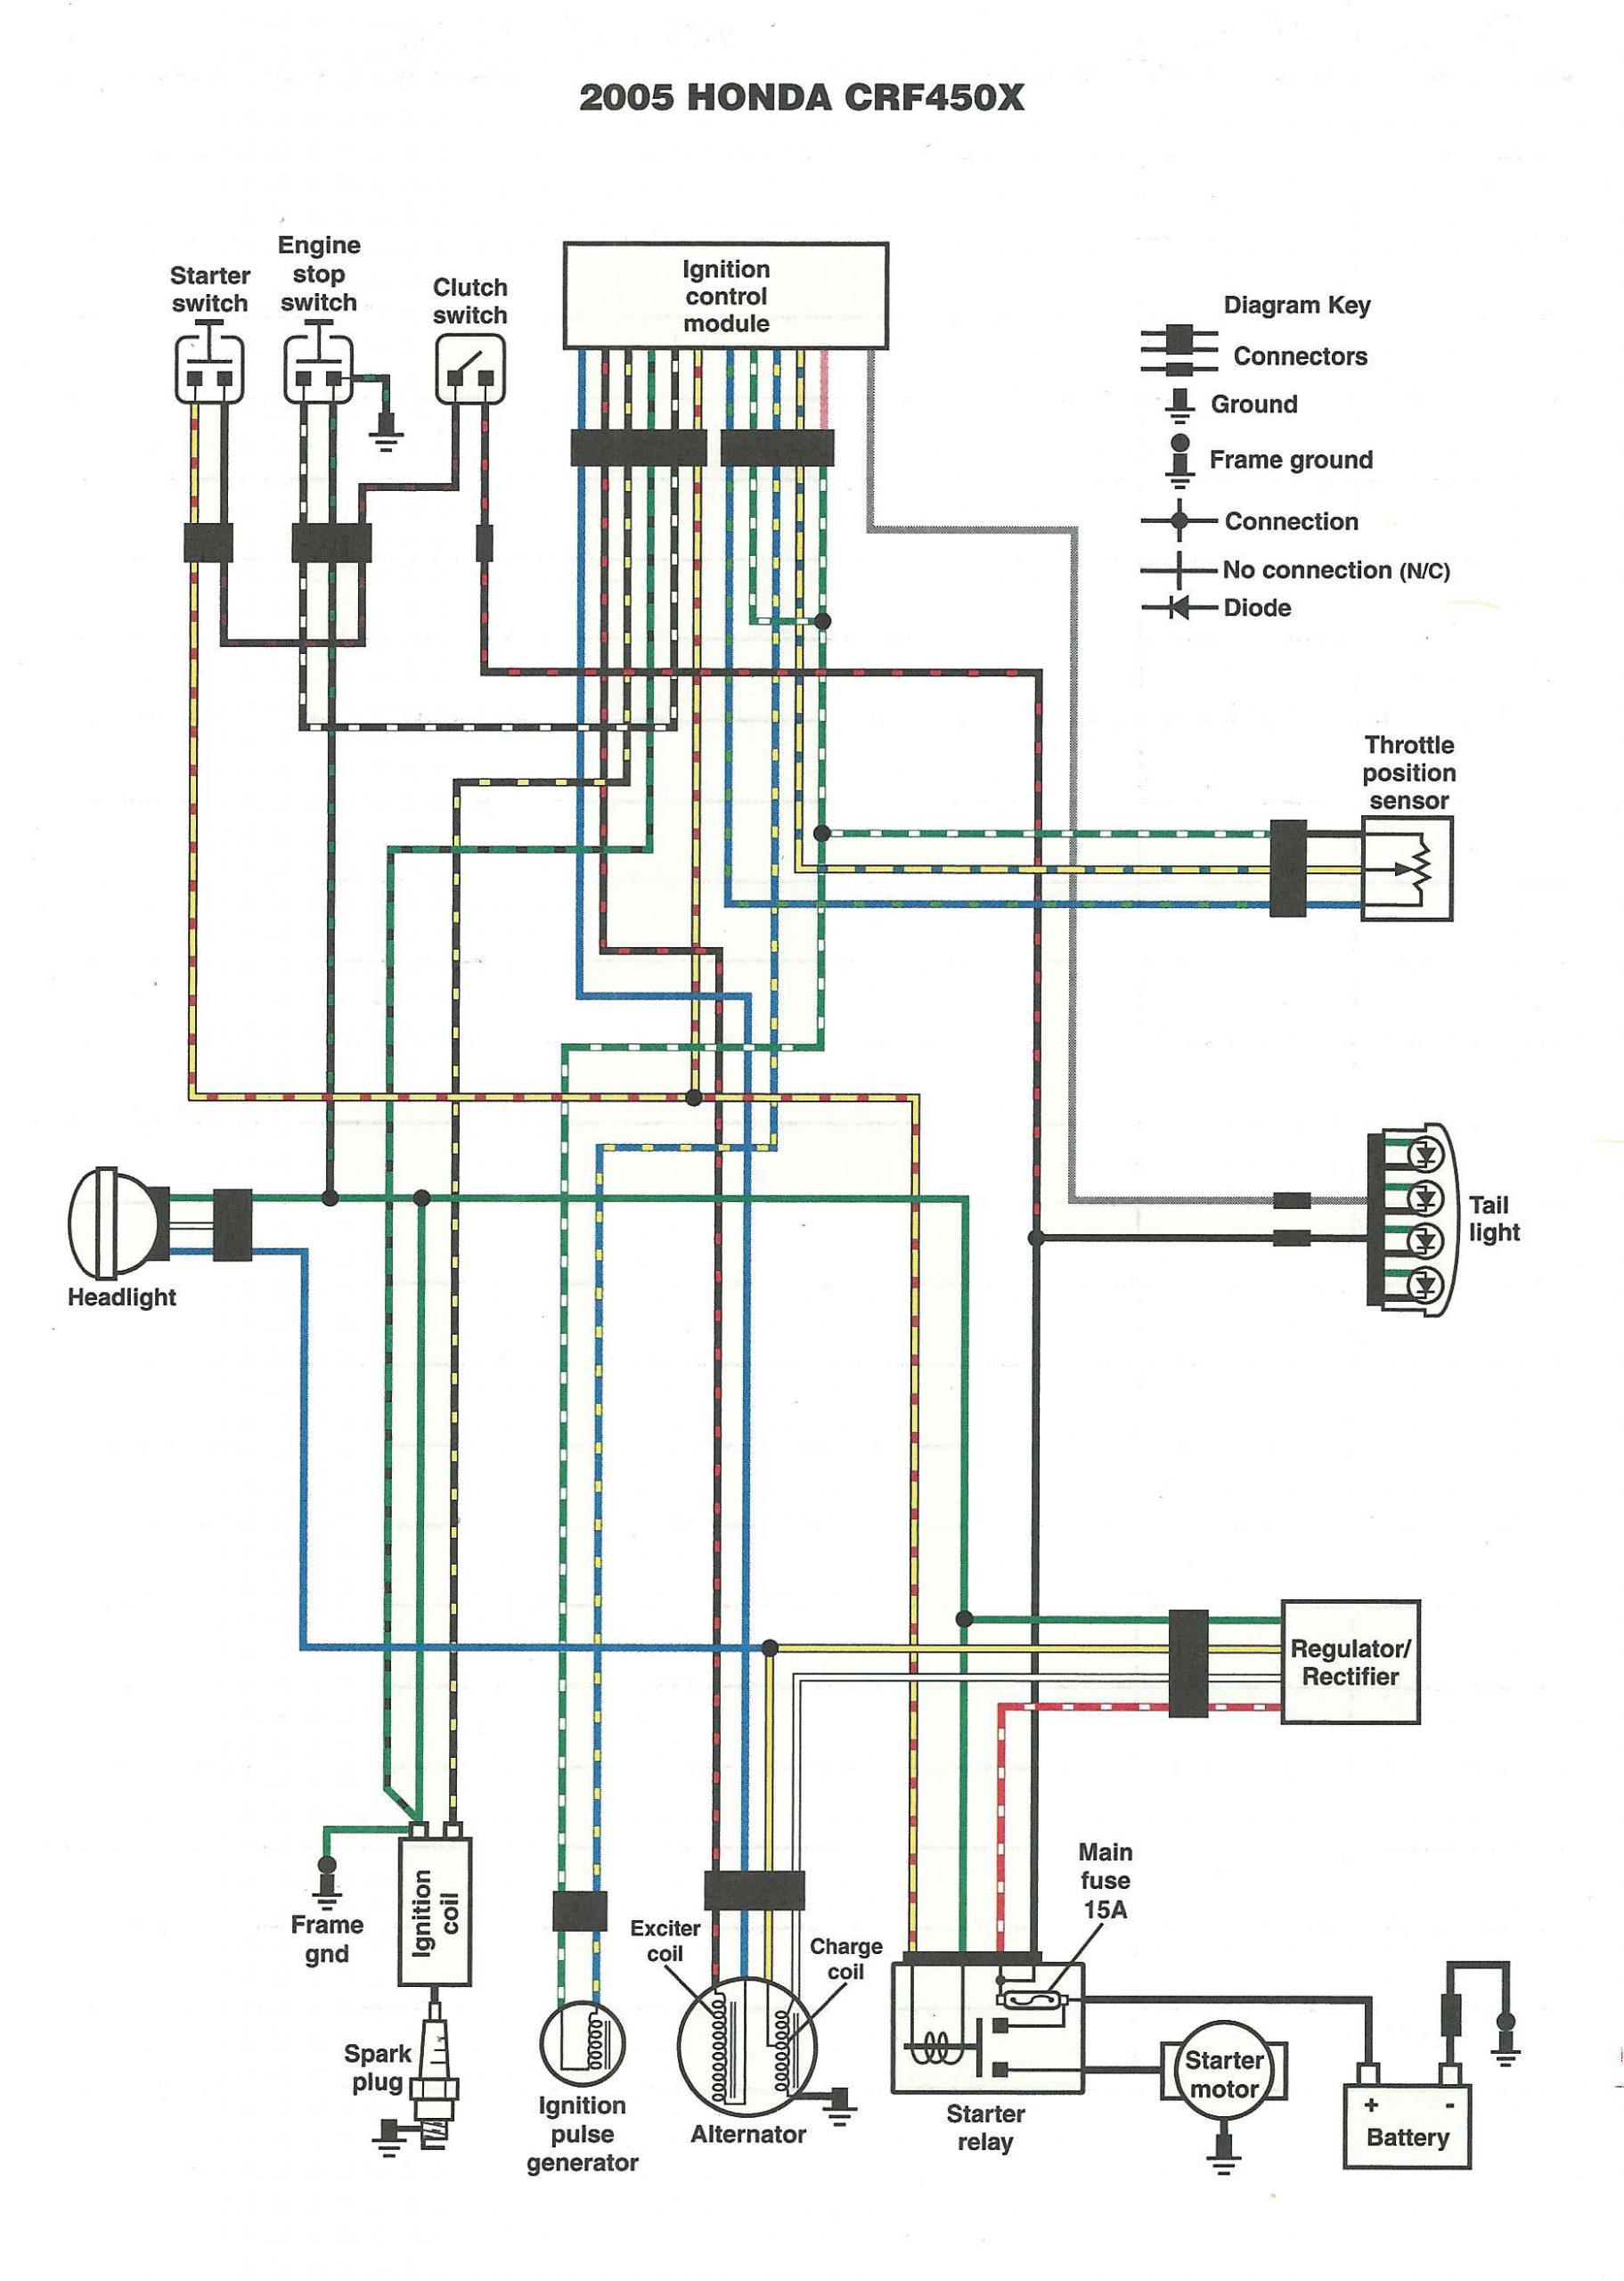 double schematic wiring diagram